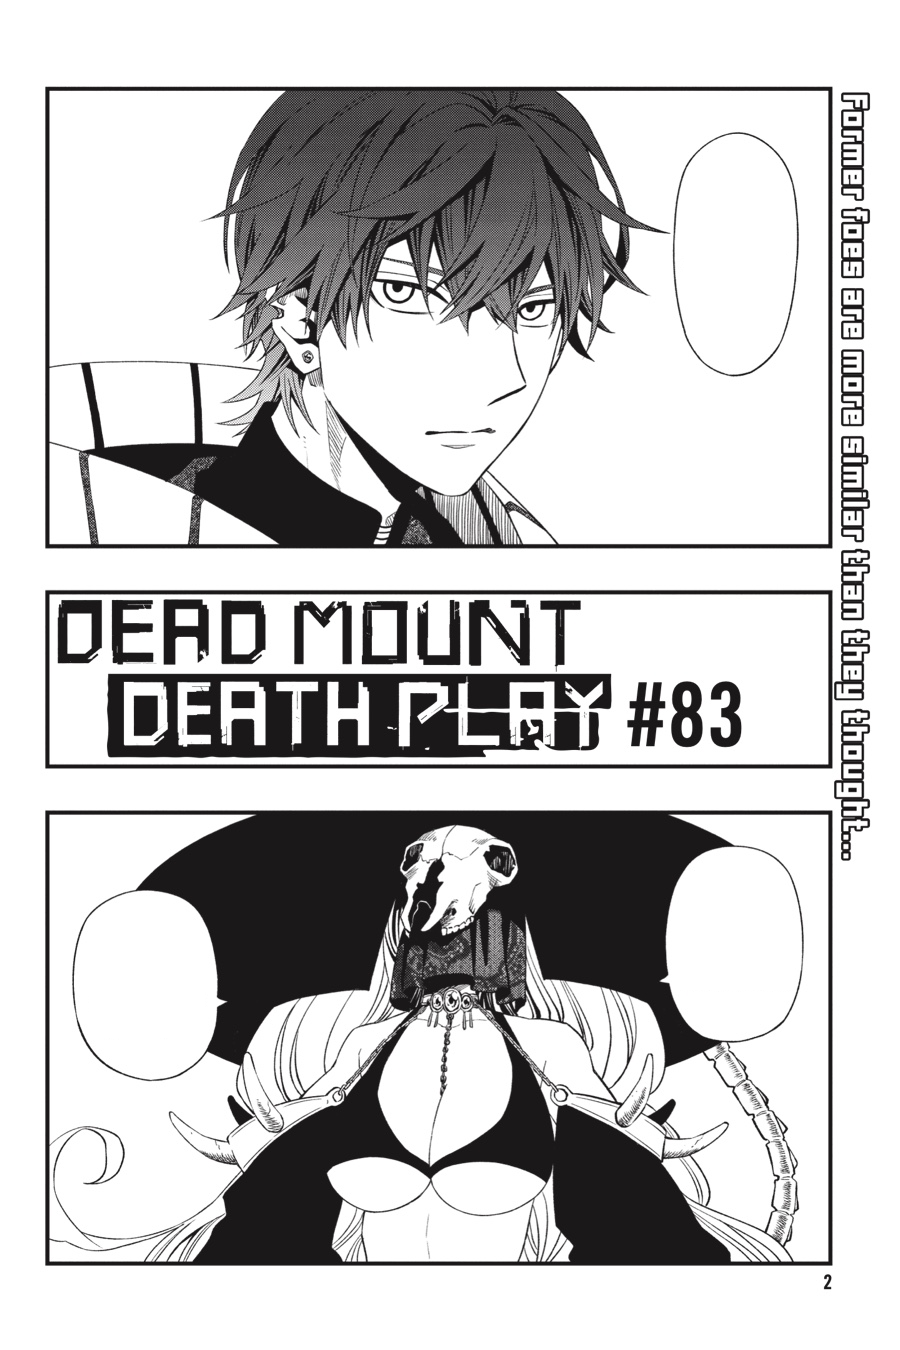 Soara Habaki, Dead Mount Death Play Wiki